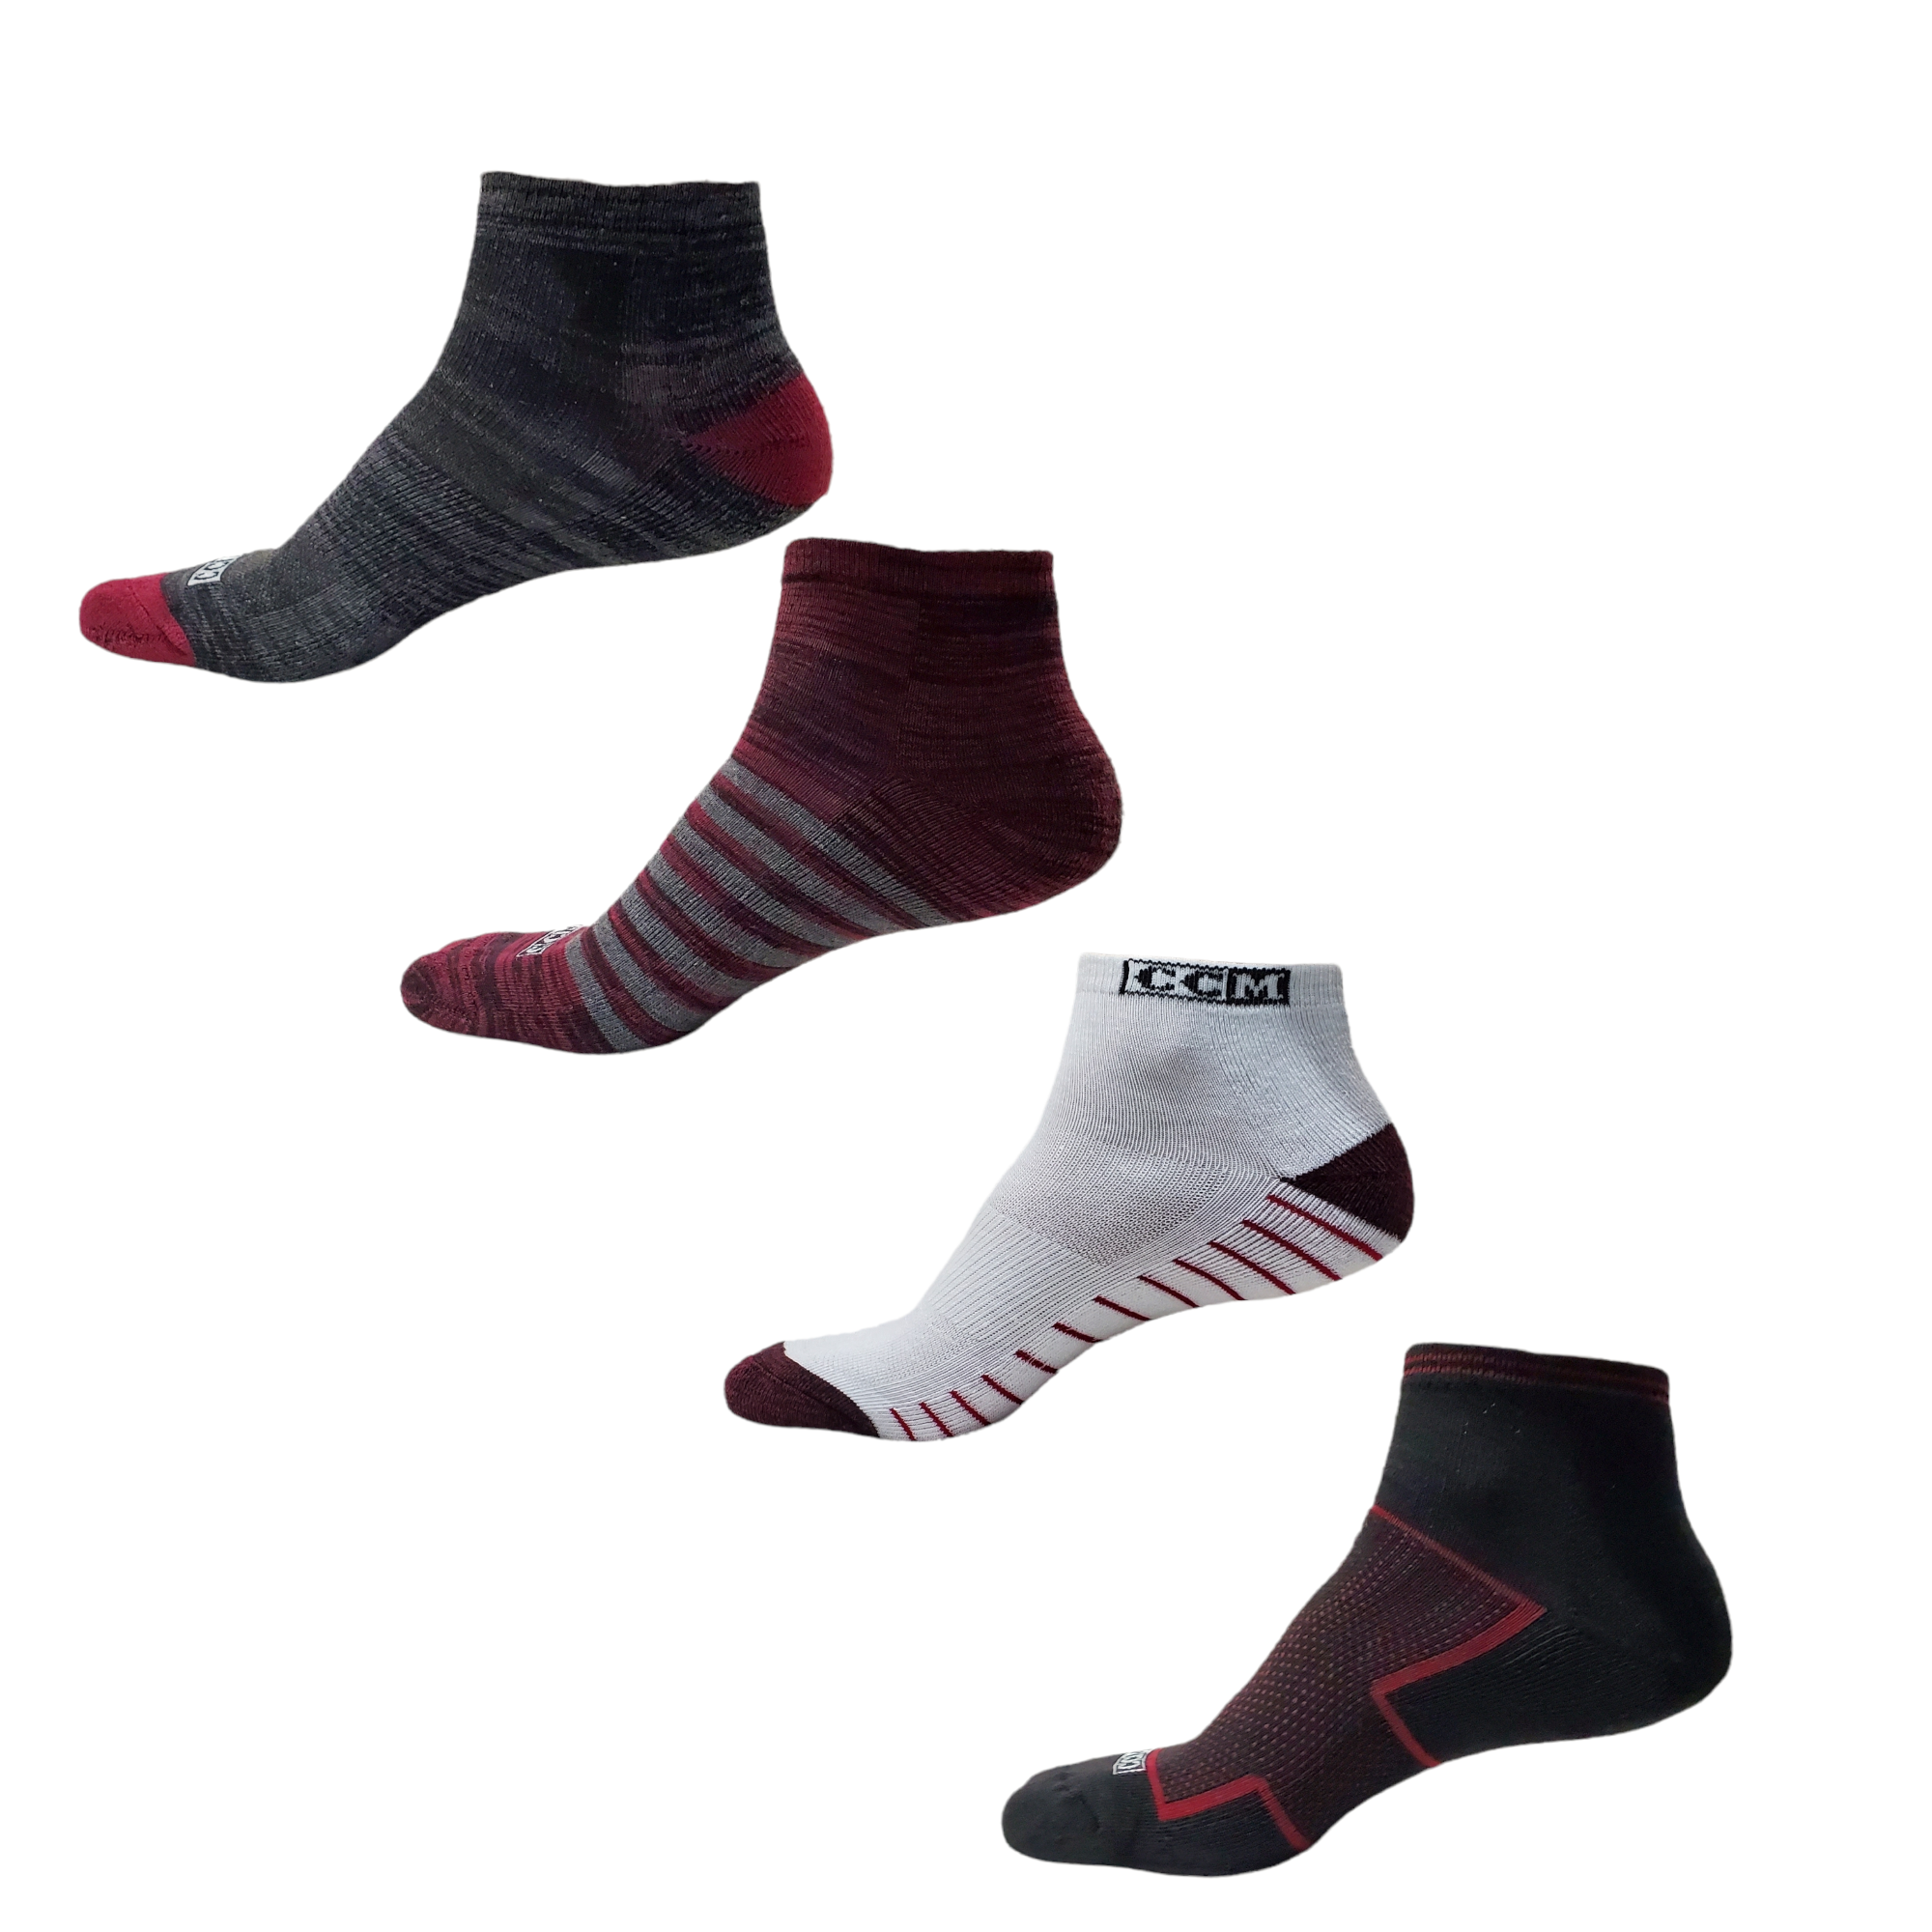 CCM Men’s Sport Ankle Sock - 6 Pairs